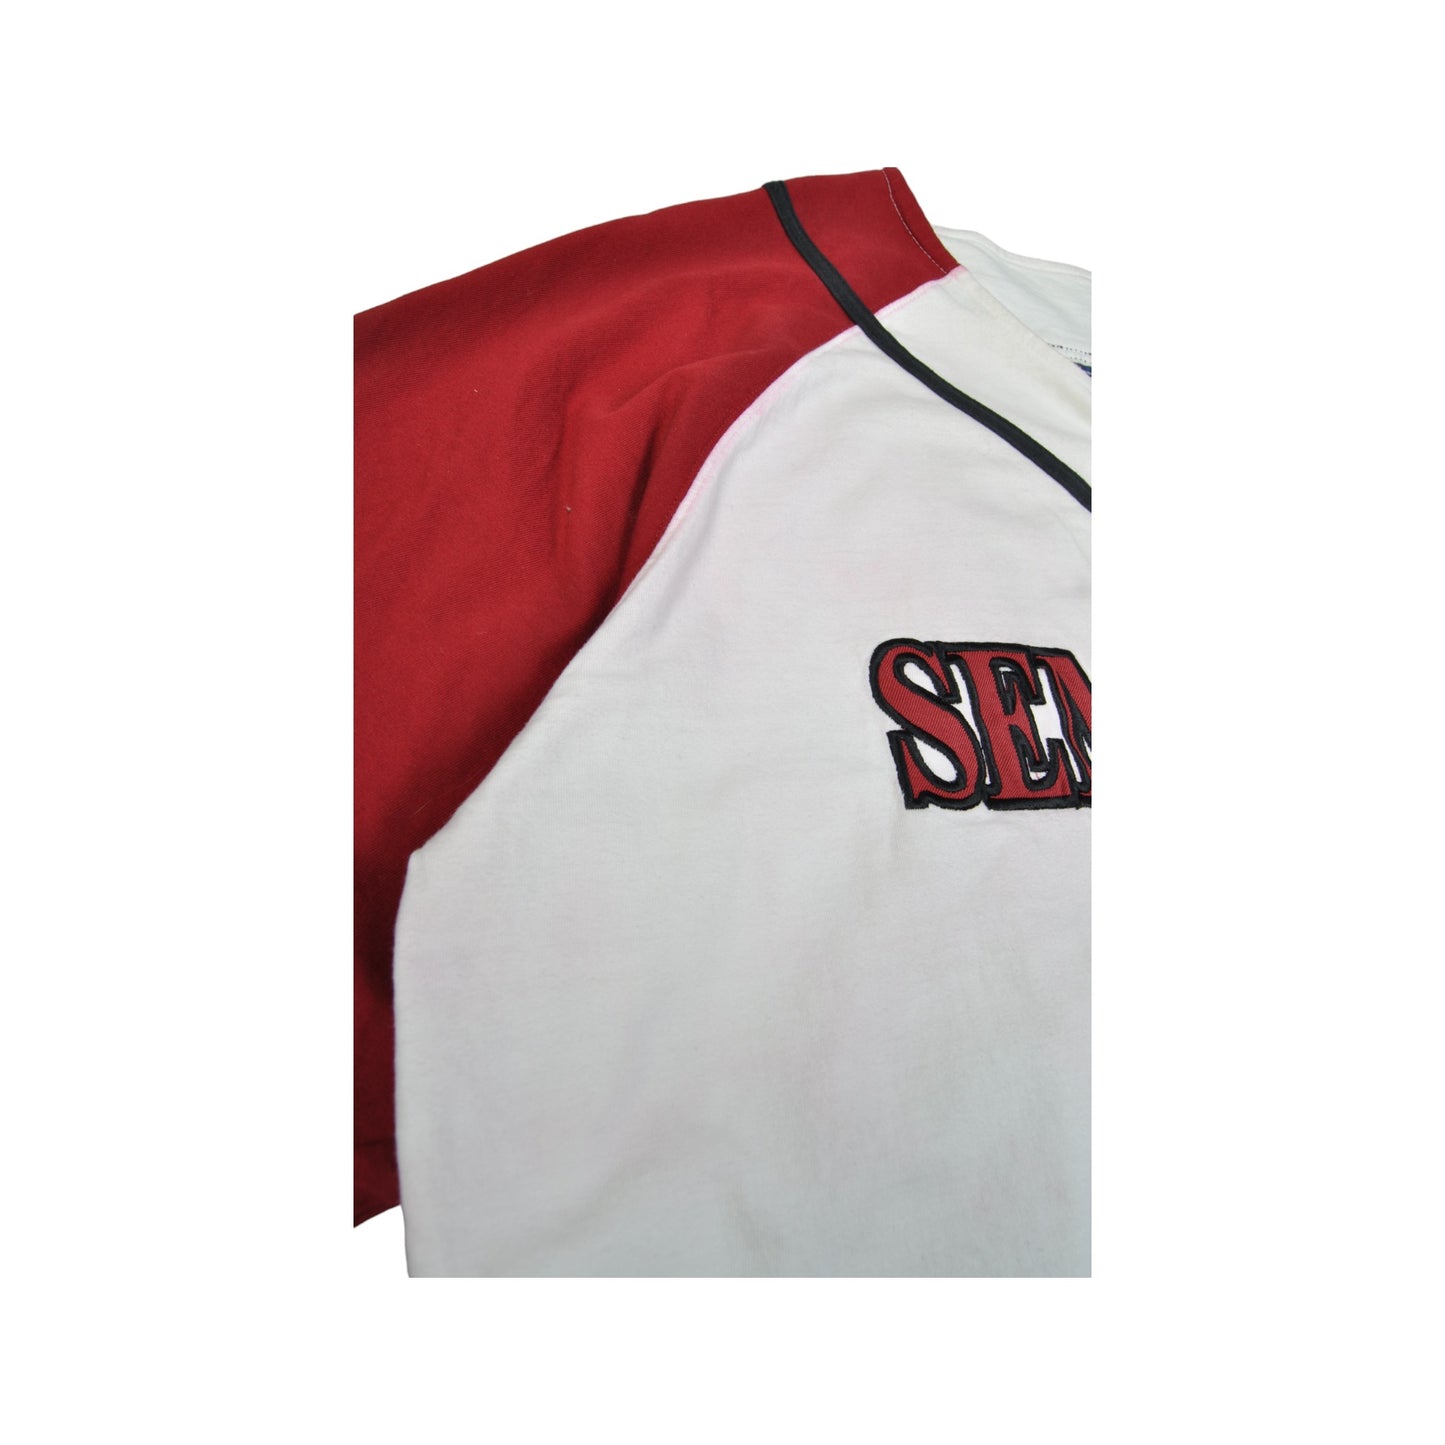 Vintage Seminoles Baseball Jersey White XXL